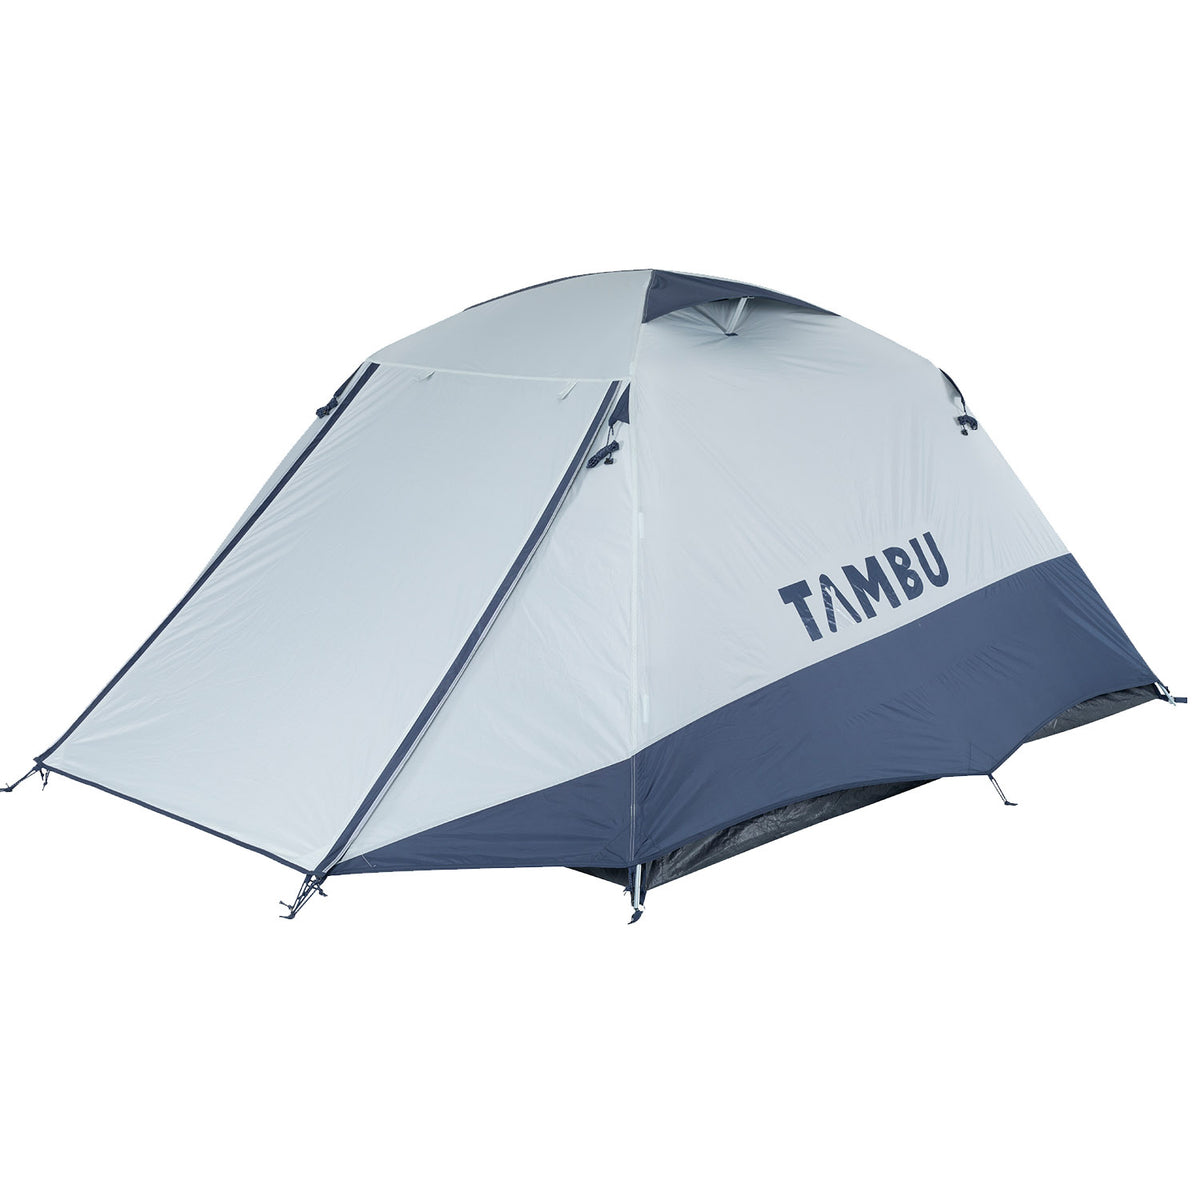 GAMBUJA 4 | 4 people dome tent